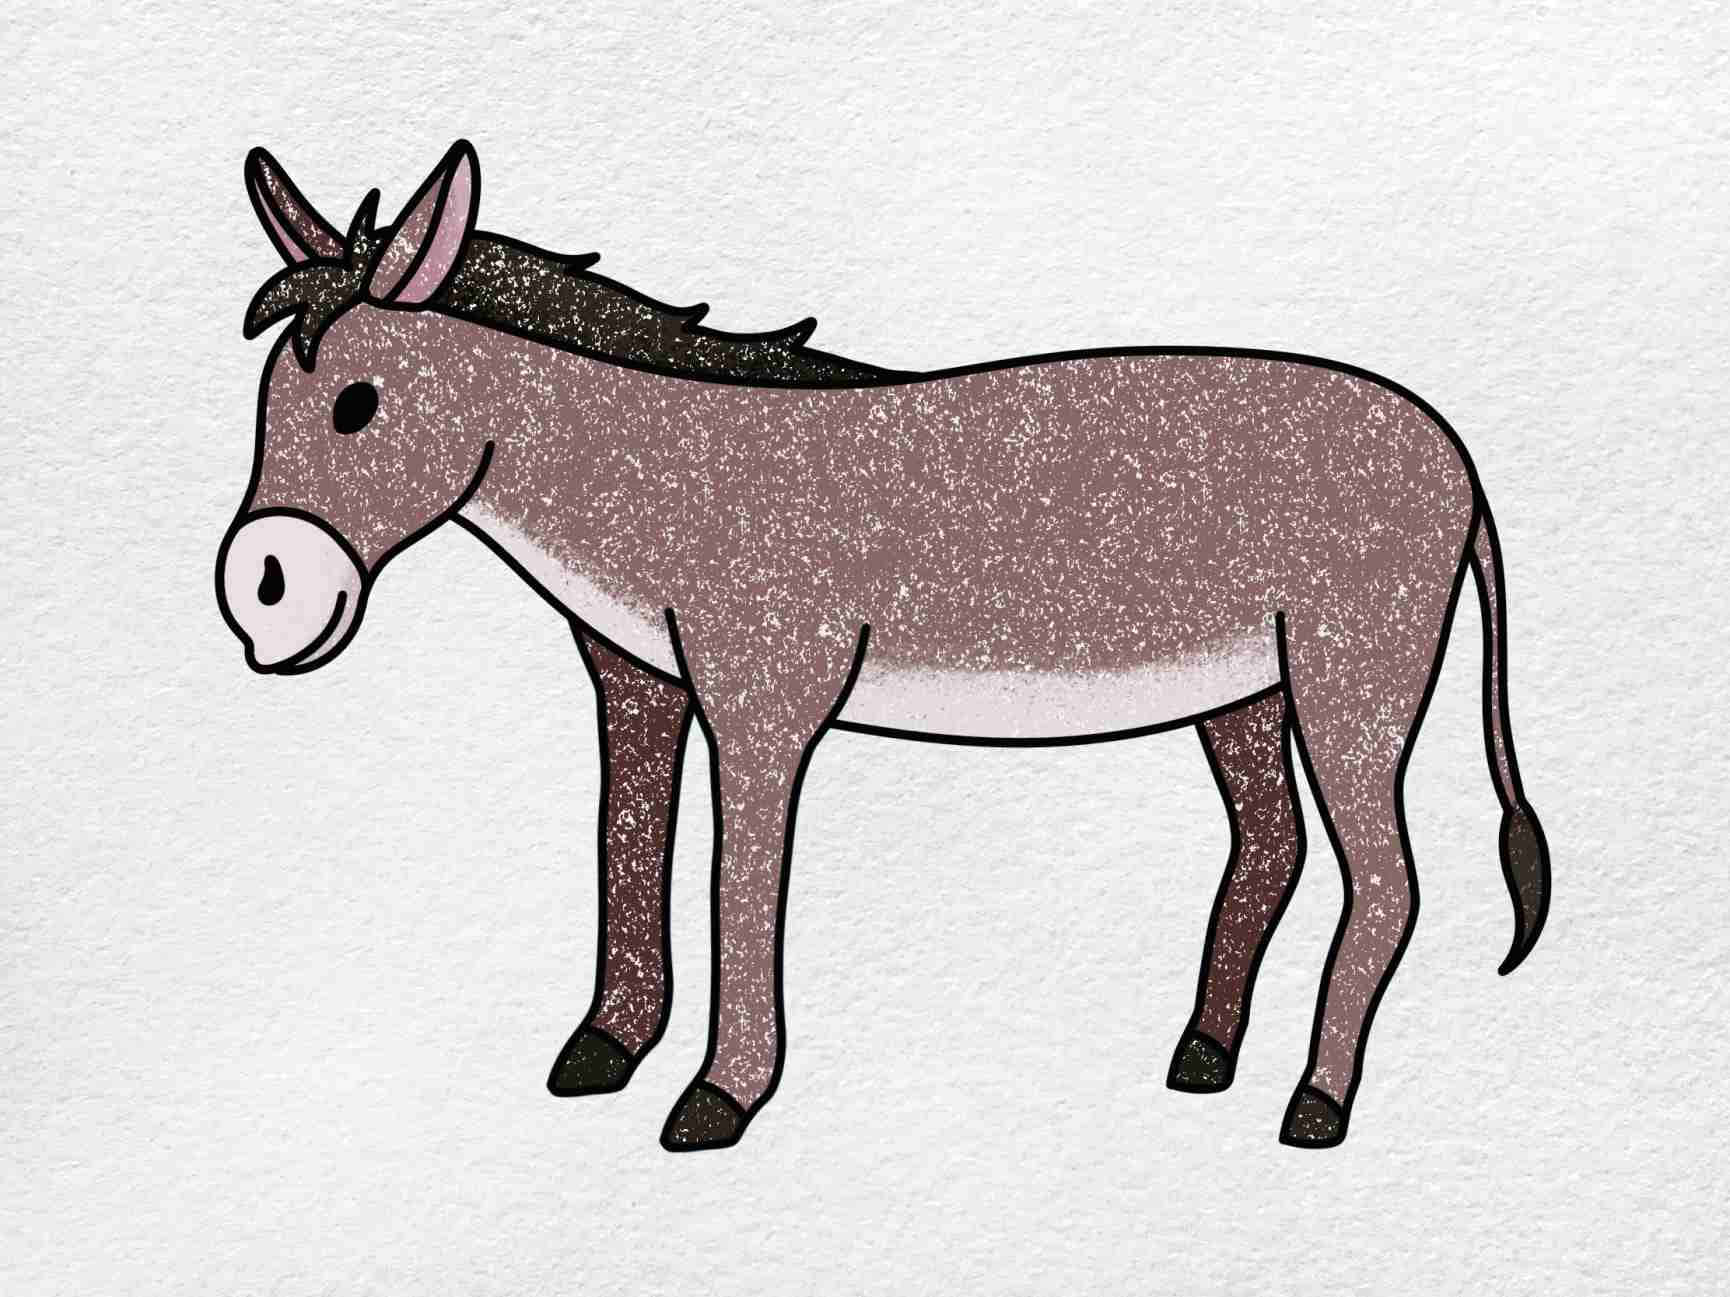 Donkeybilder(as In Pictures Of Donkeys)